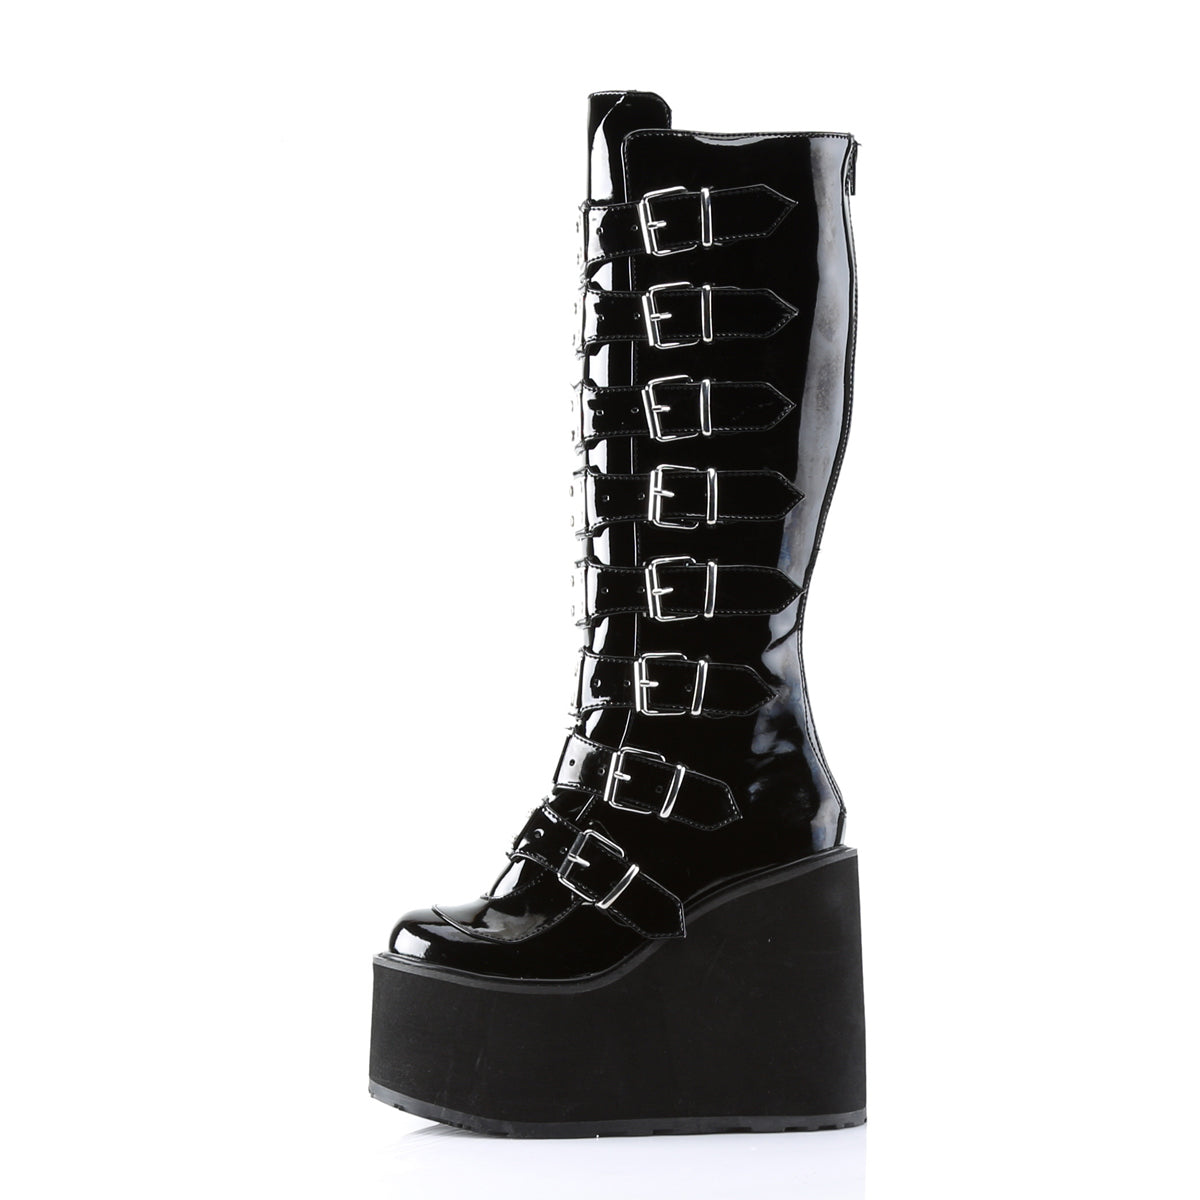 SWING-815 Demonia Black Patent Women's Mid-Calf & Knee High Boots [Demonia Cult Alternative Footwear]